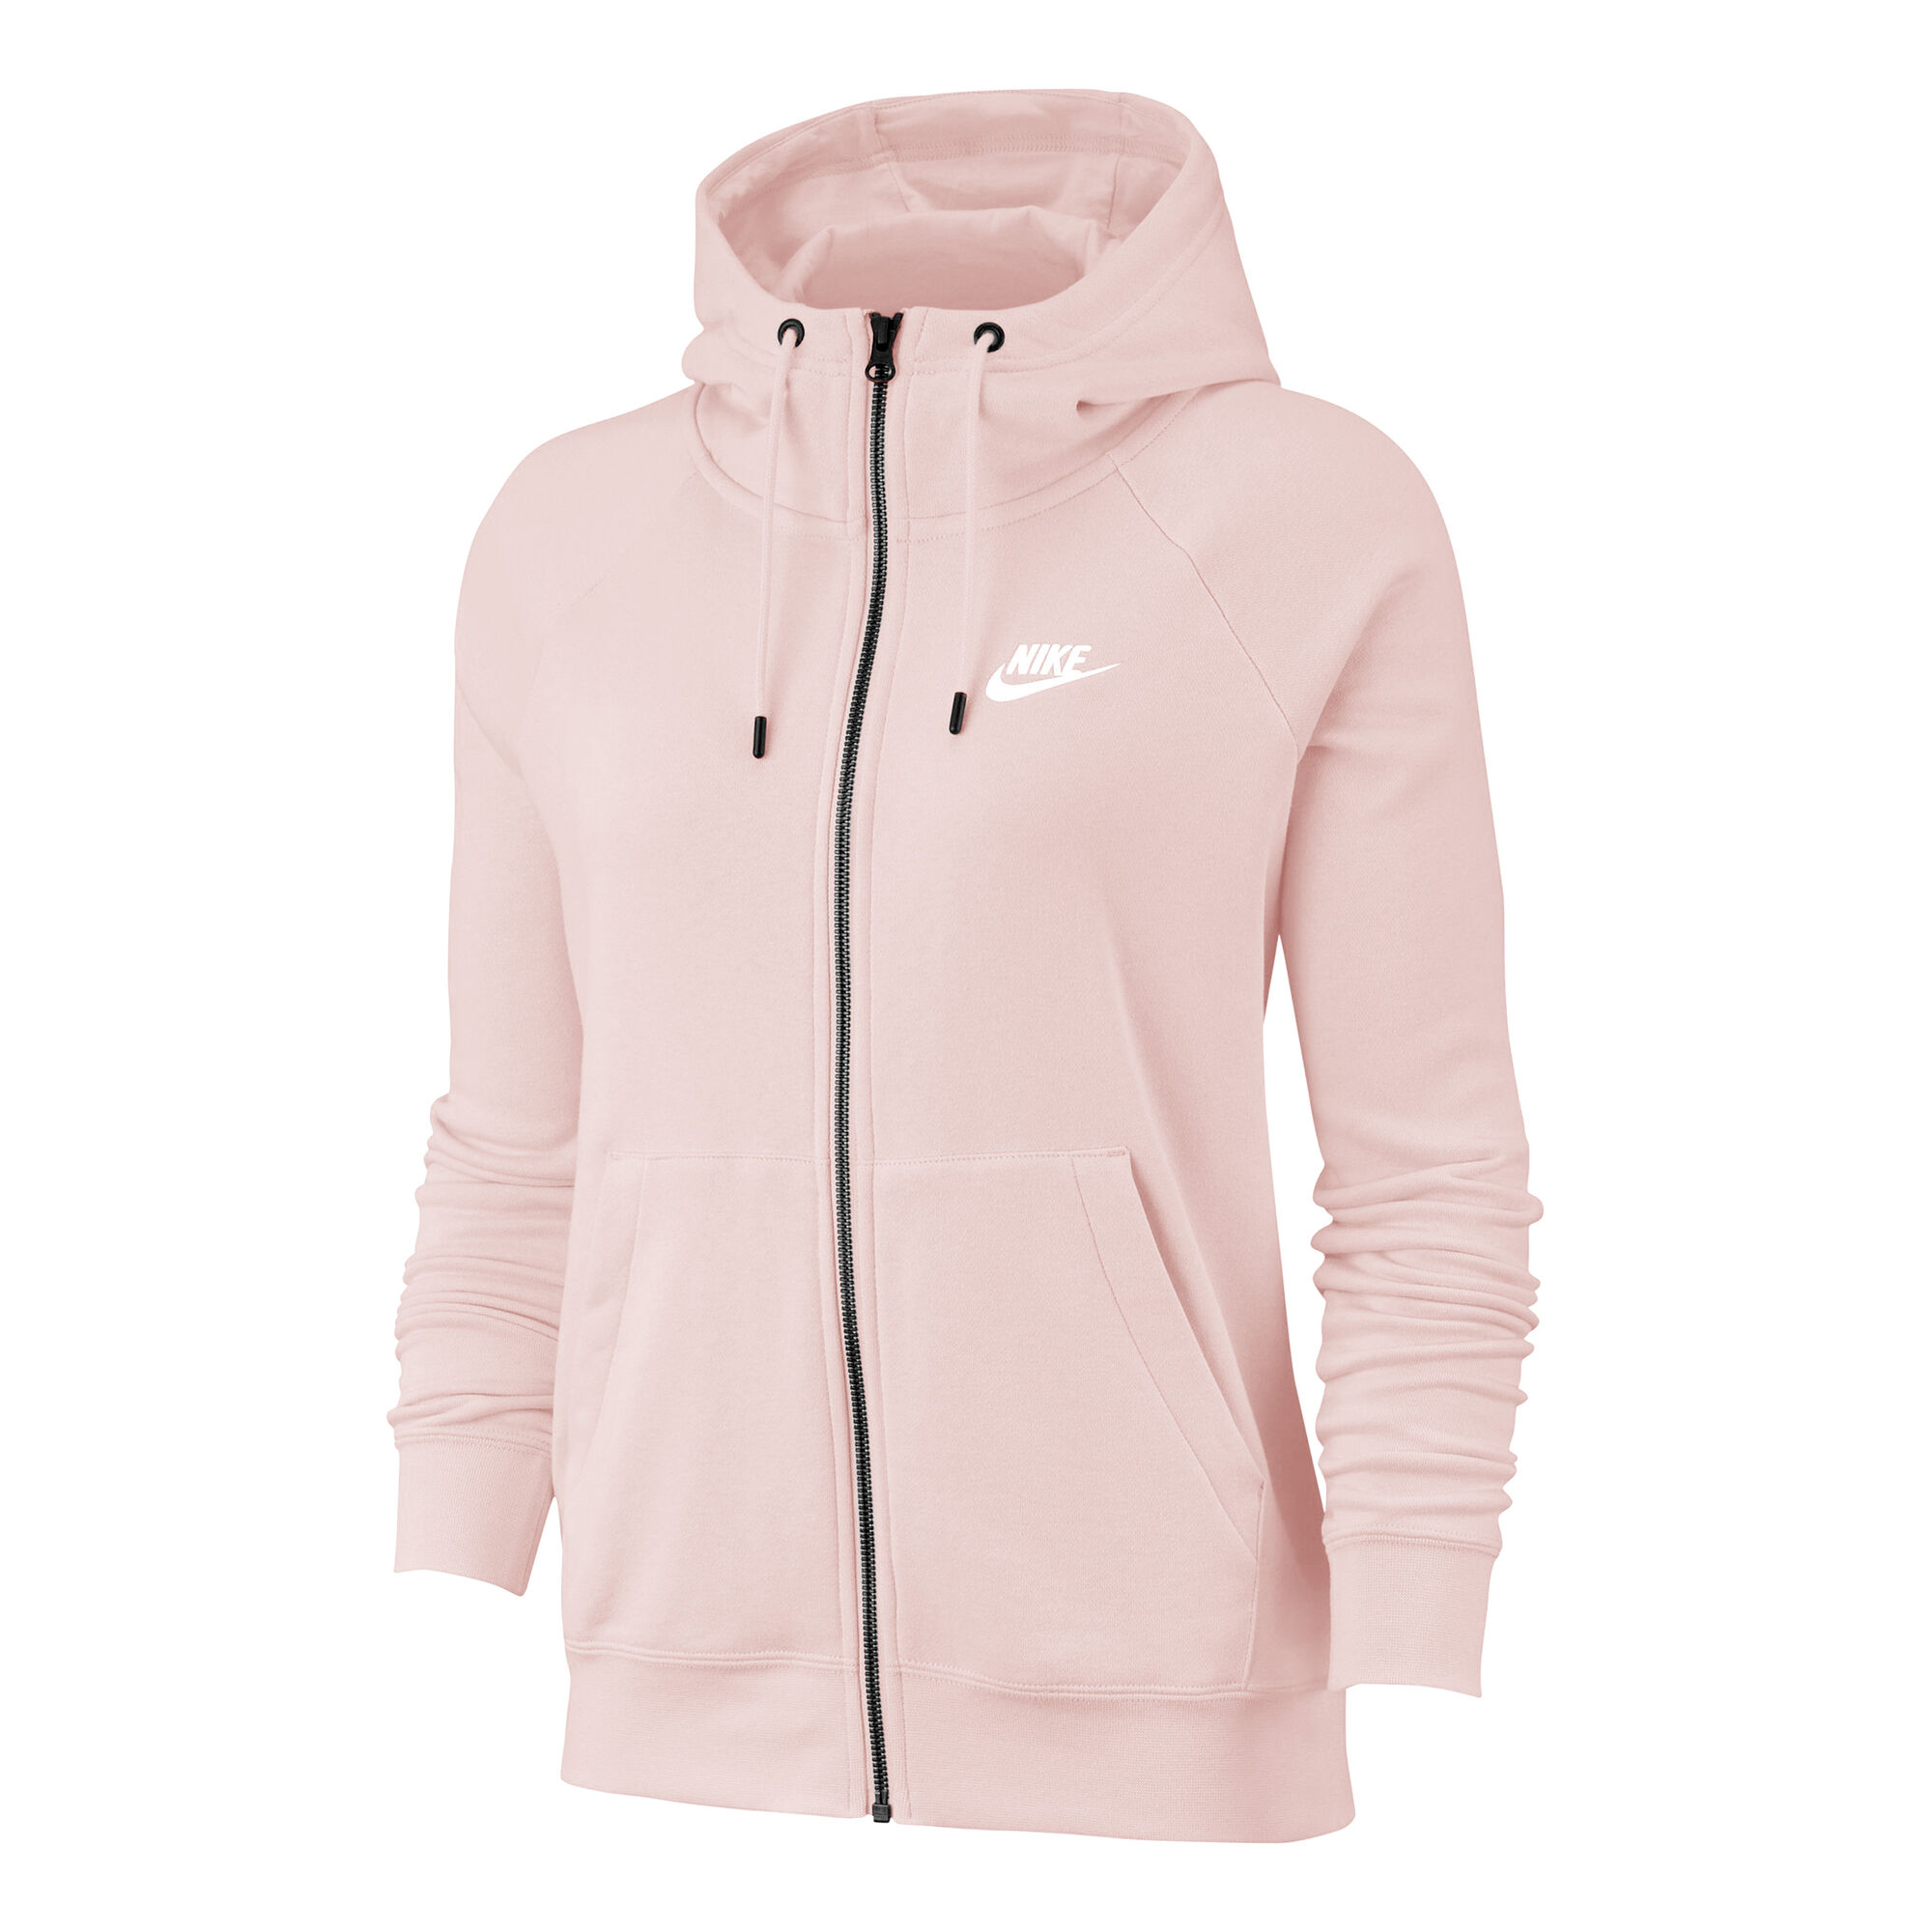 Buy Nike Sportswear Zip Hoodie Women Pink online